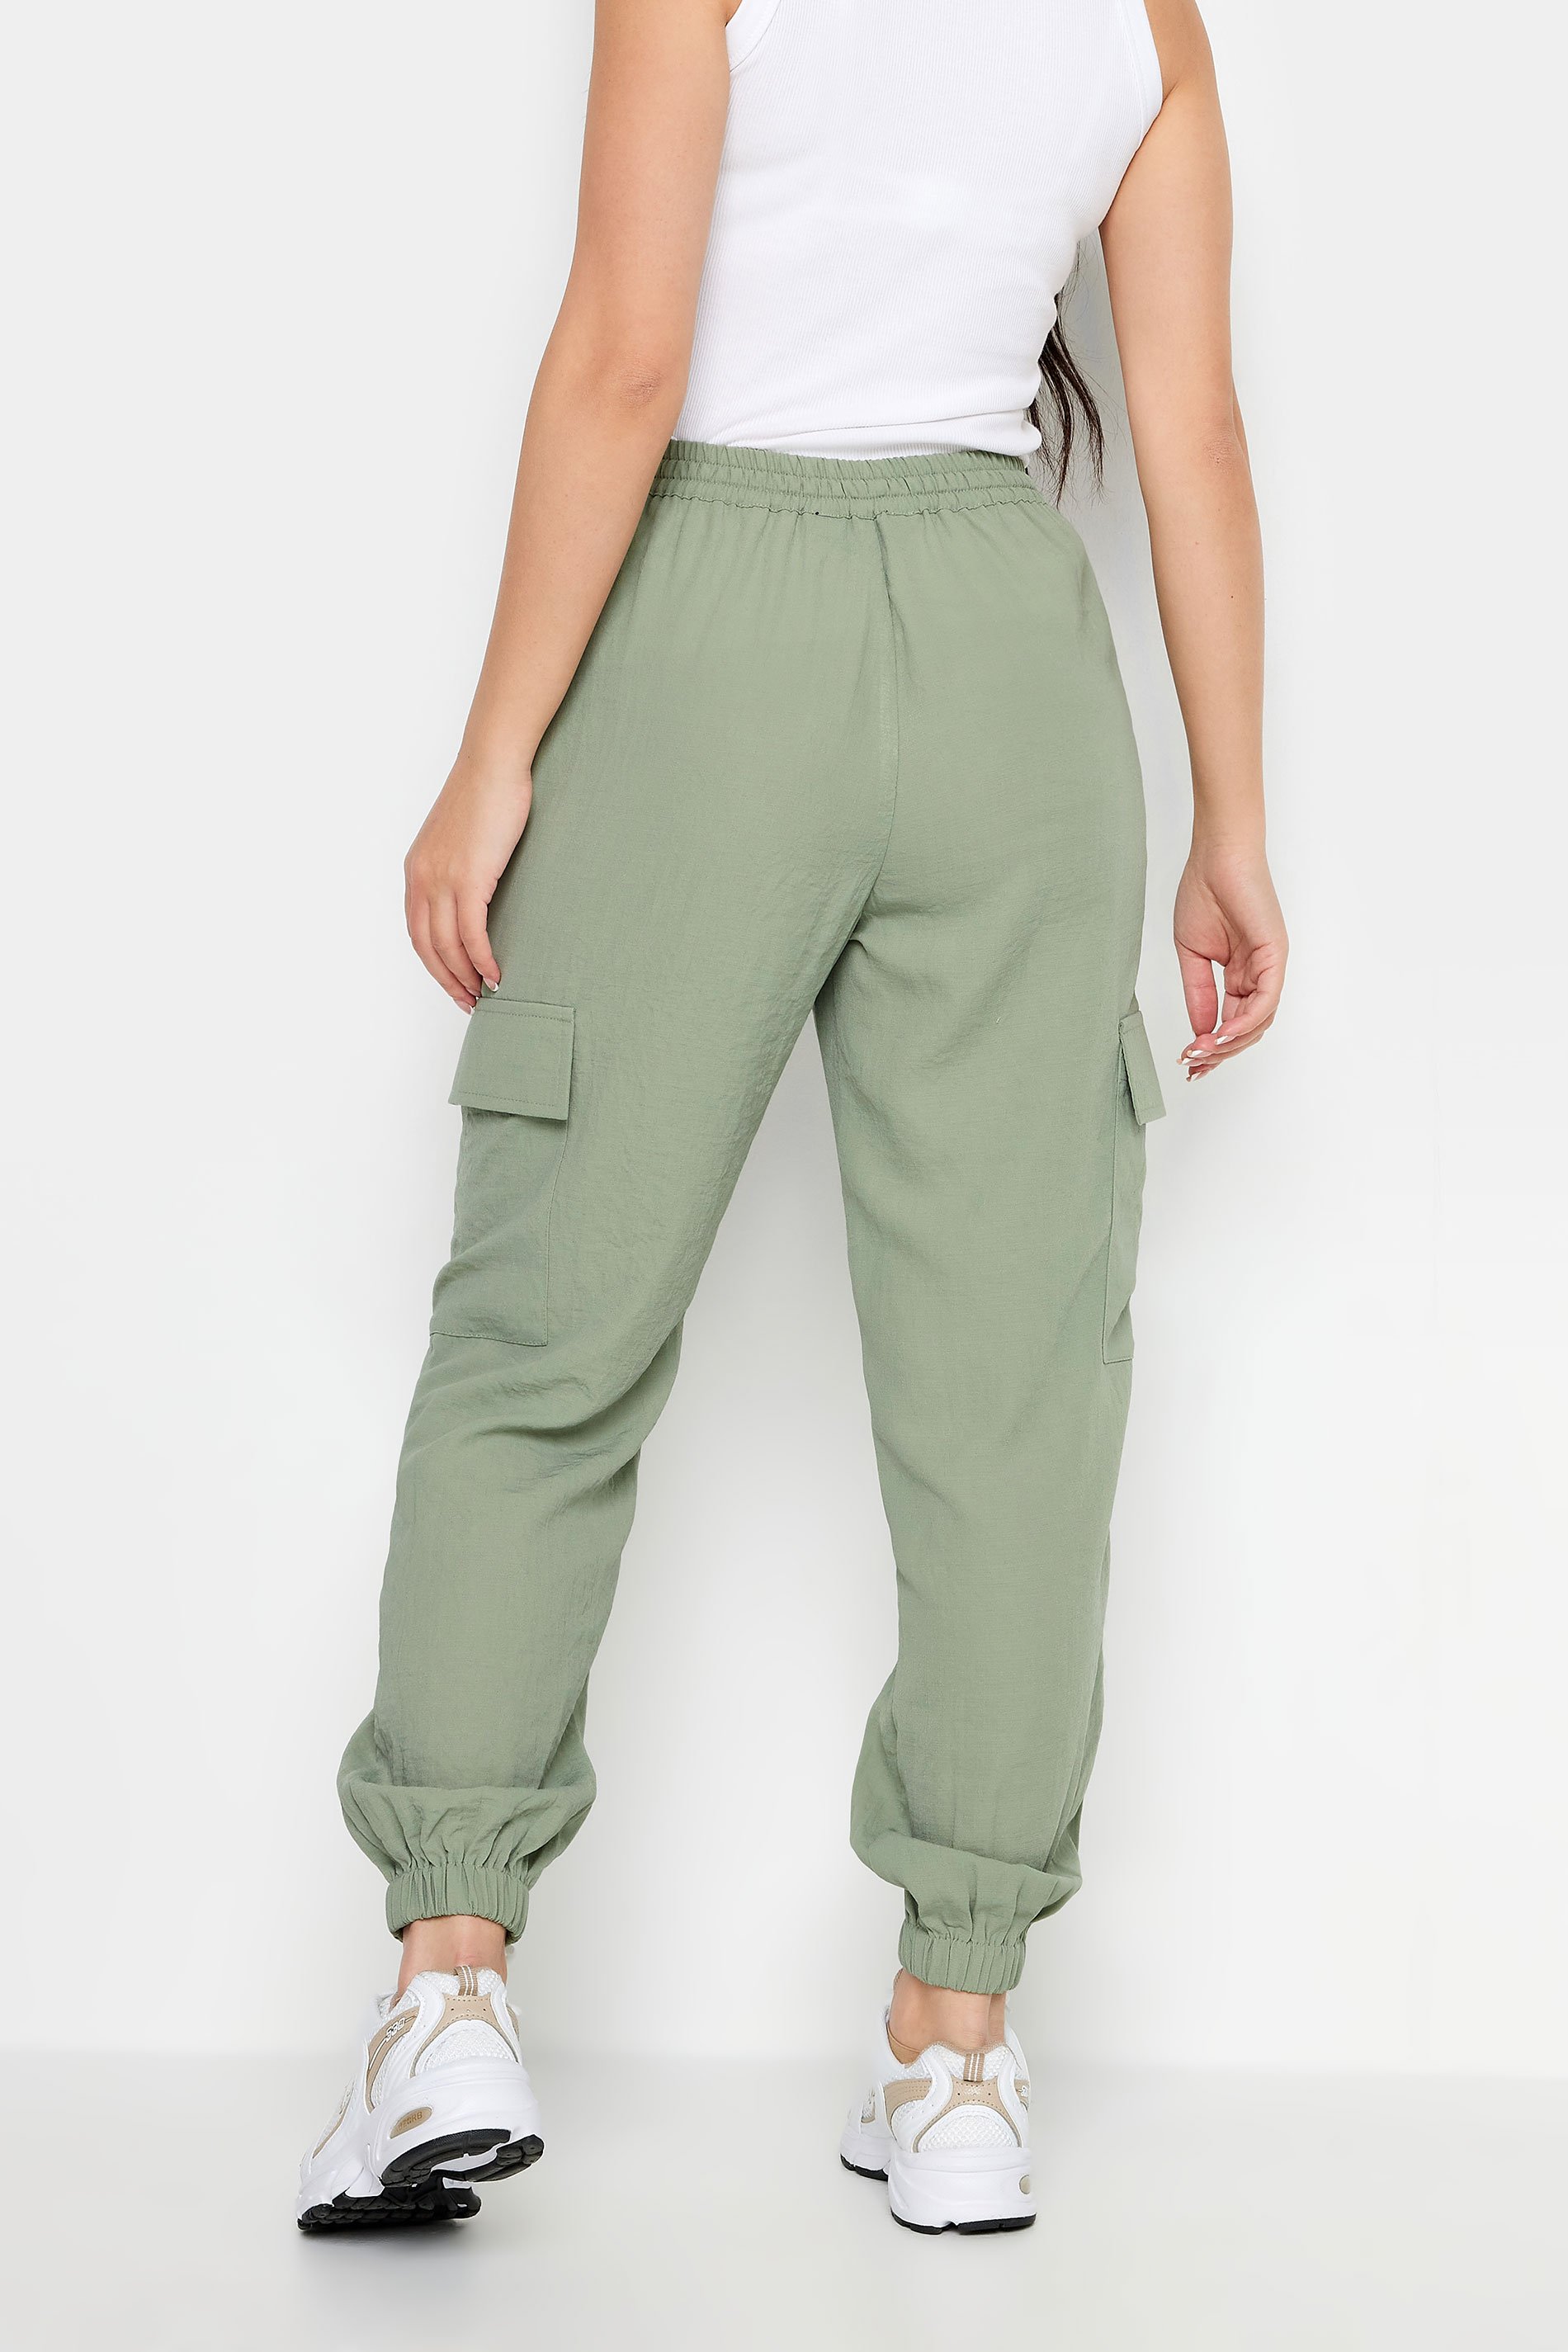 PixieGirl Petite Womens Sage Green Cuffed Cargo Trousers | PixieGirl 3